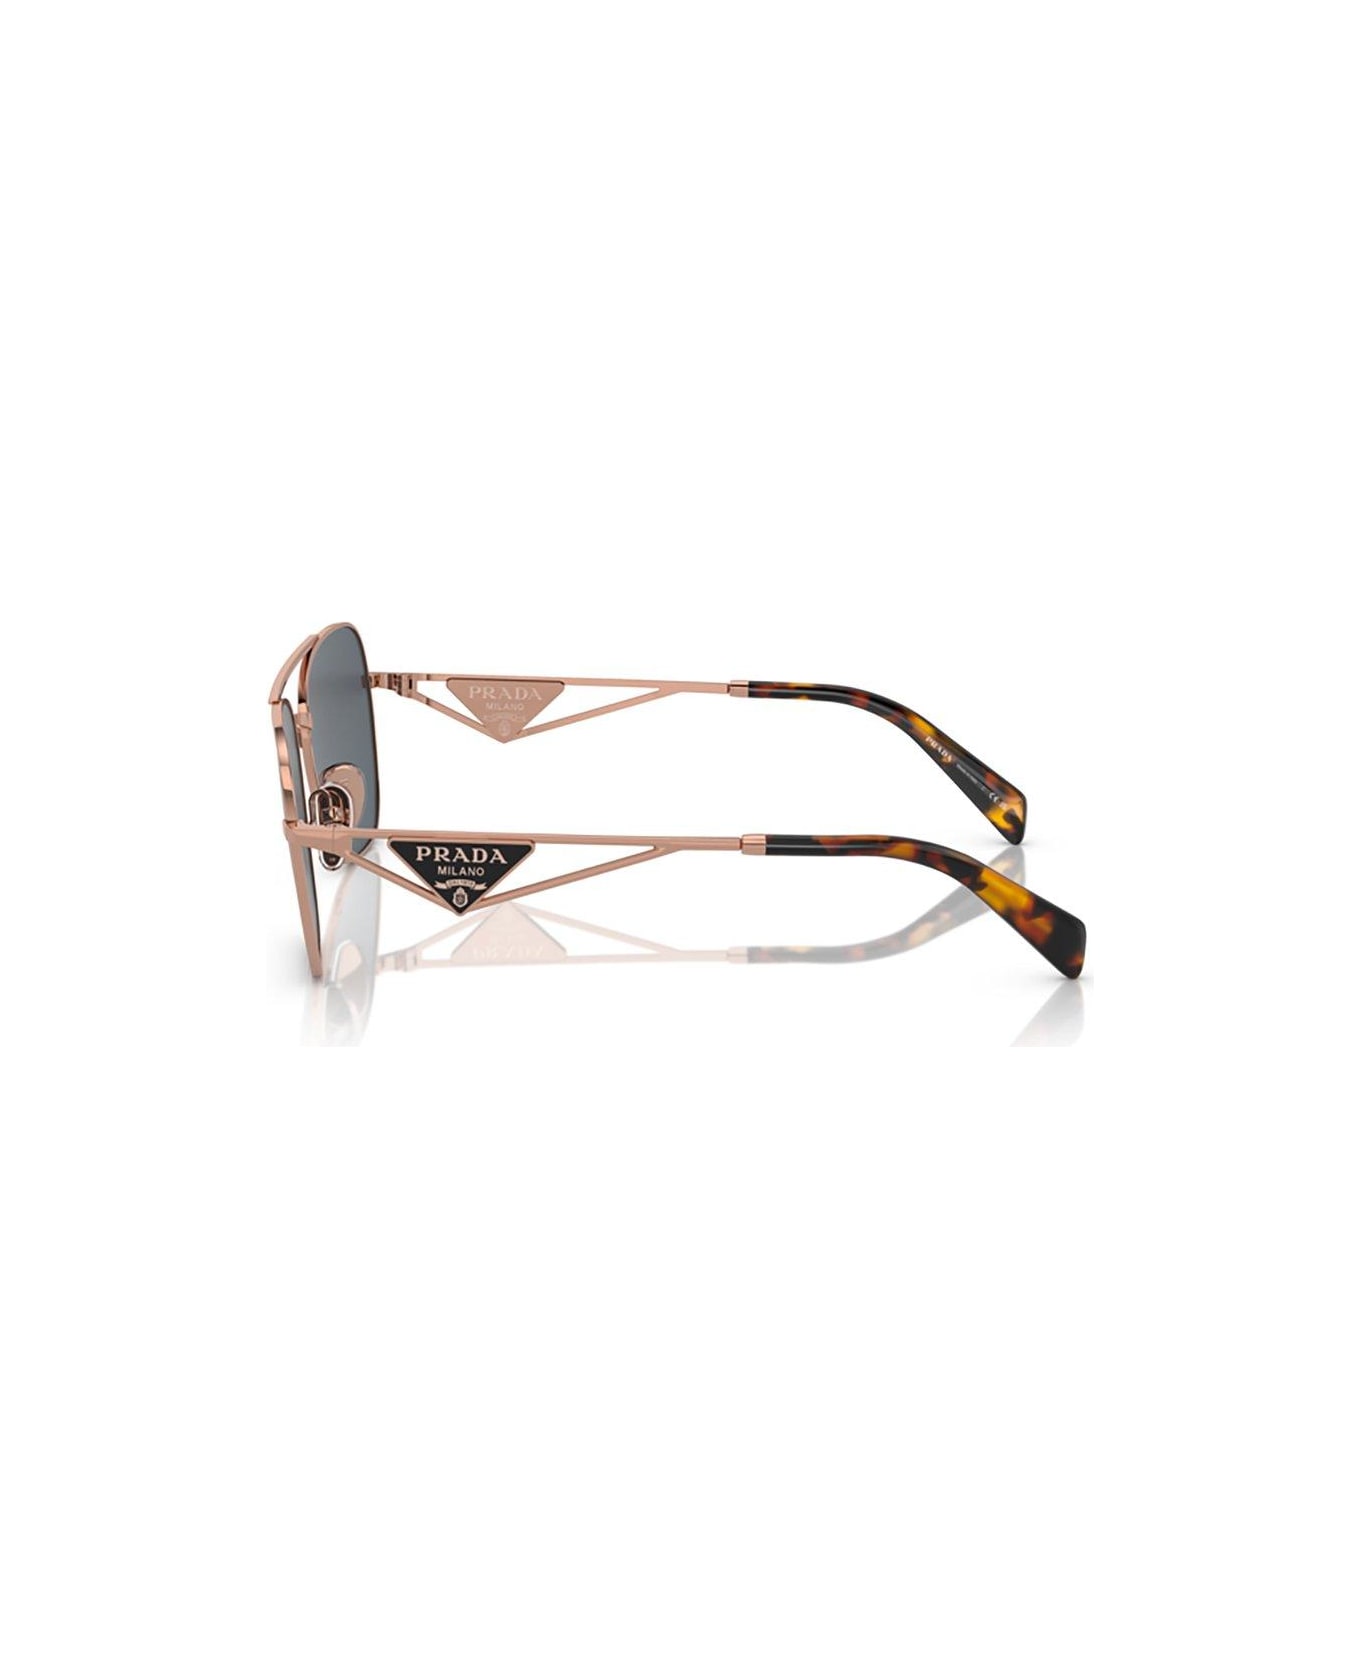 Prada Eyewear Pilot Frame Sunglasses Sunglasses - SVF09T Rose Gold